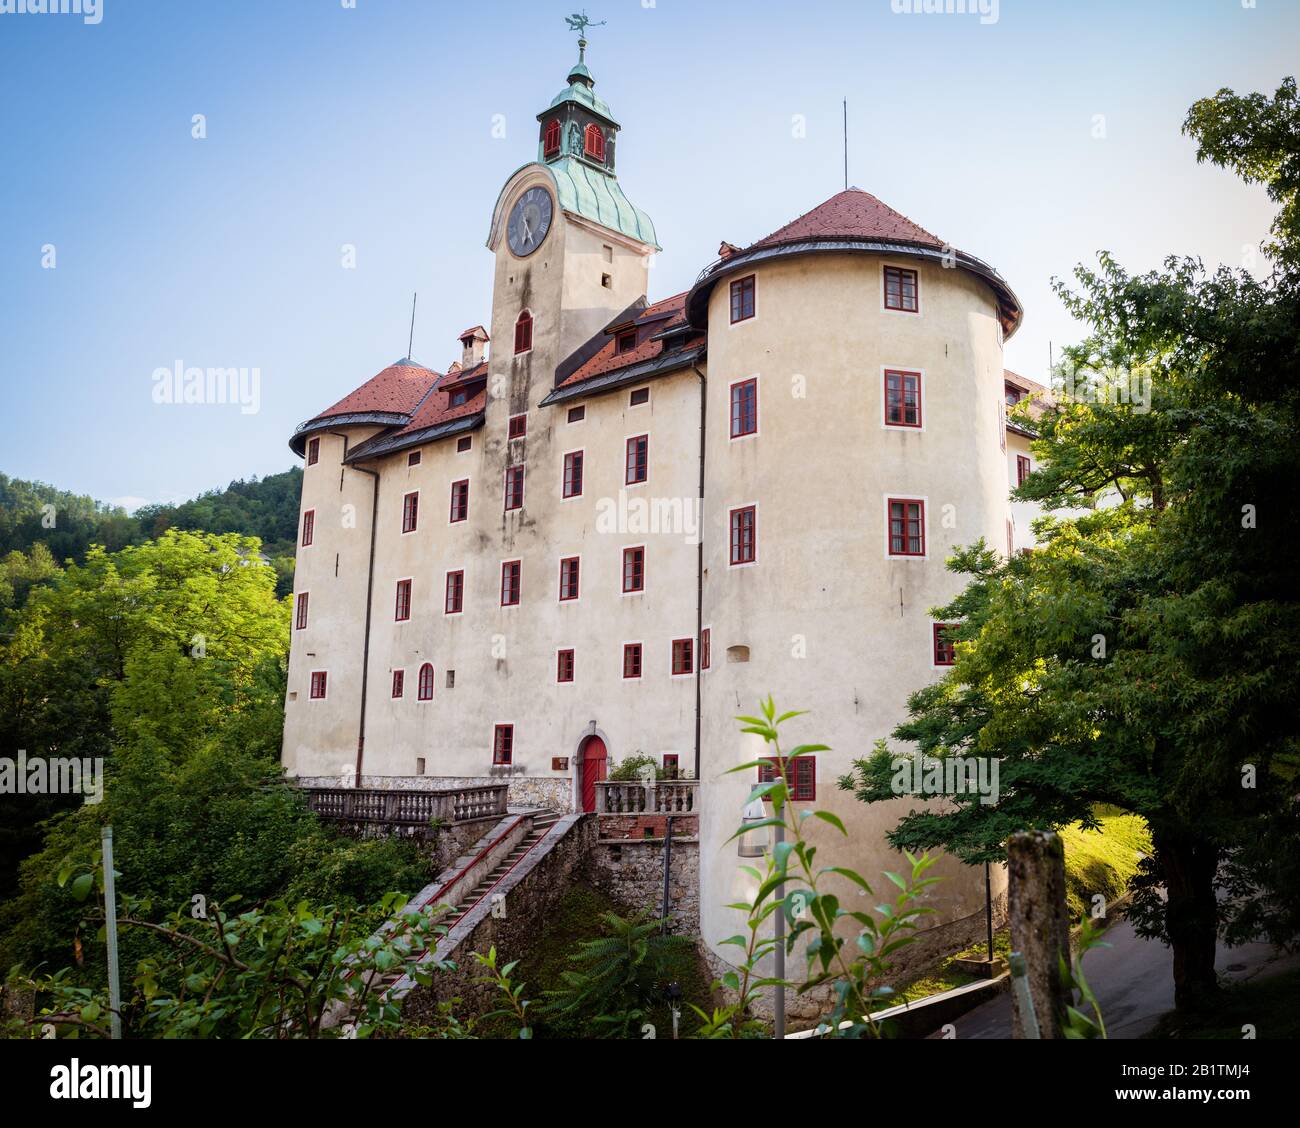 Panarama of Gewerkenegg Castle The Idrija Municipal Museum, Slovenia Stock Photo